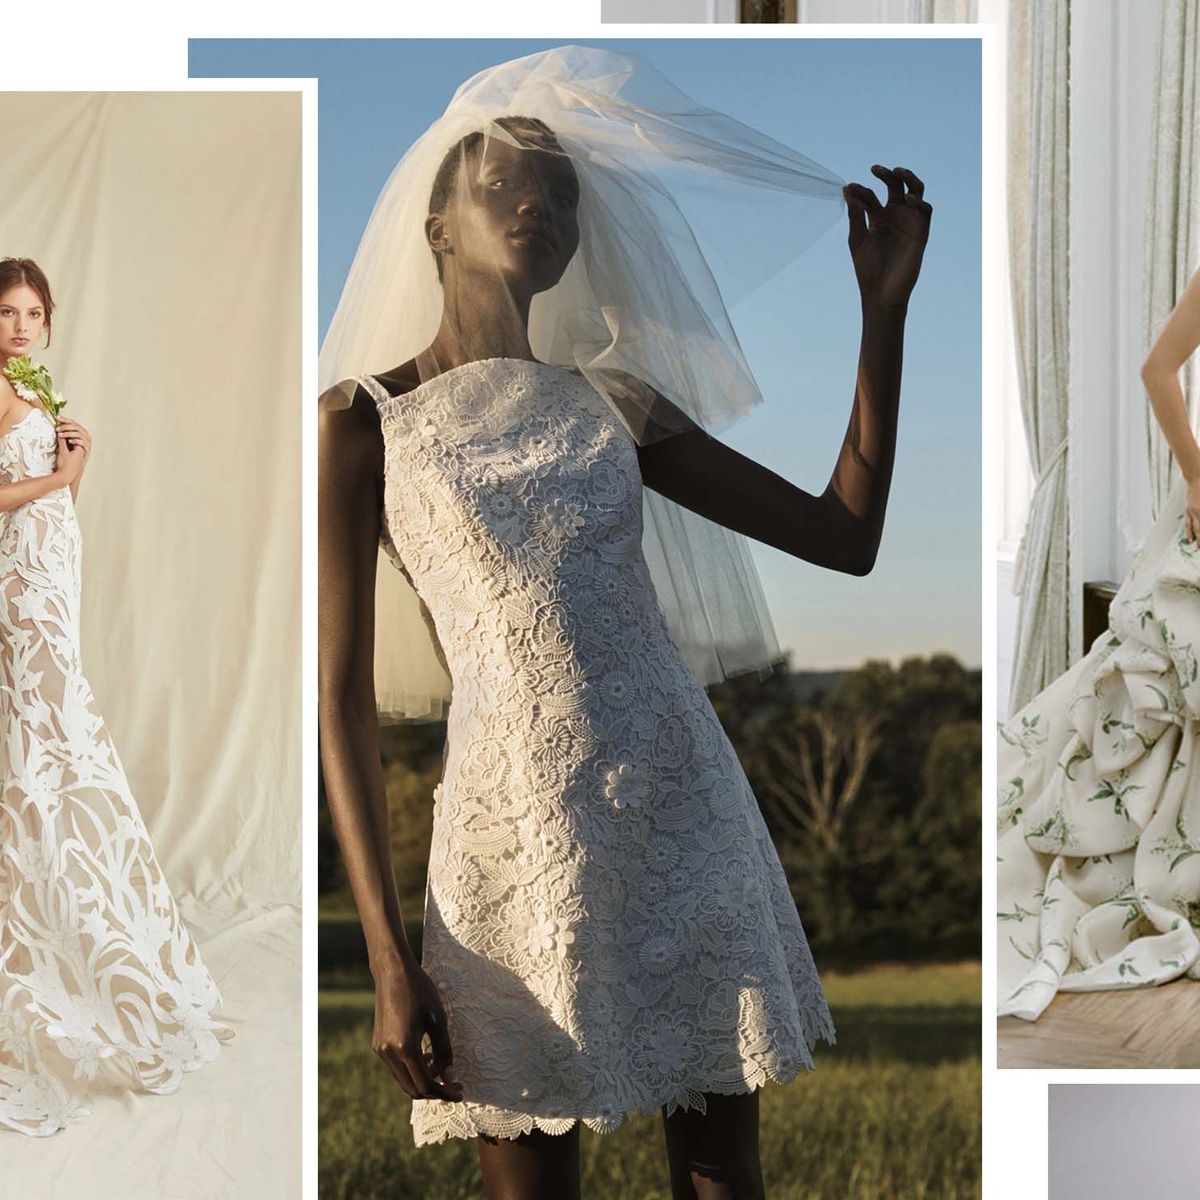 Choosing a Short Wedding Dress For Your Shape - Cutting Edge BridesCutting  Edge Brides